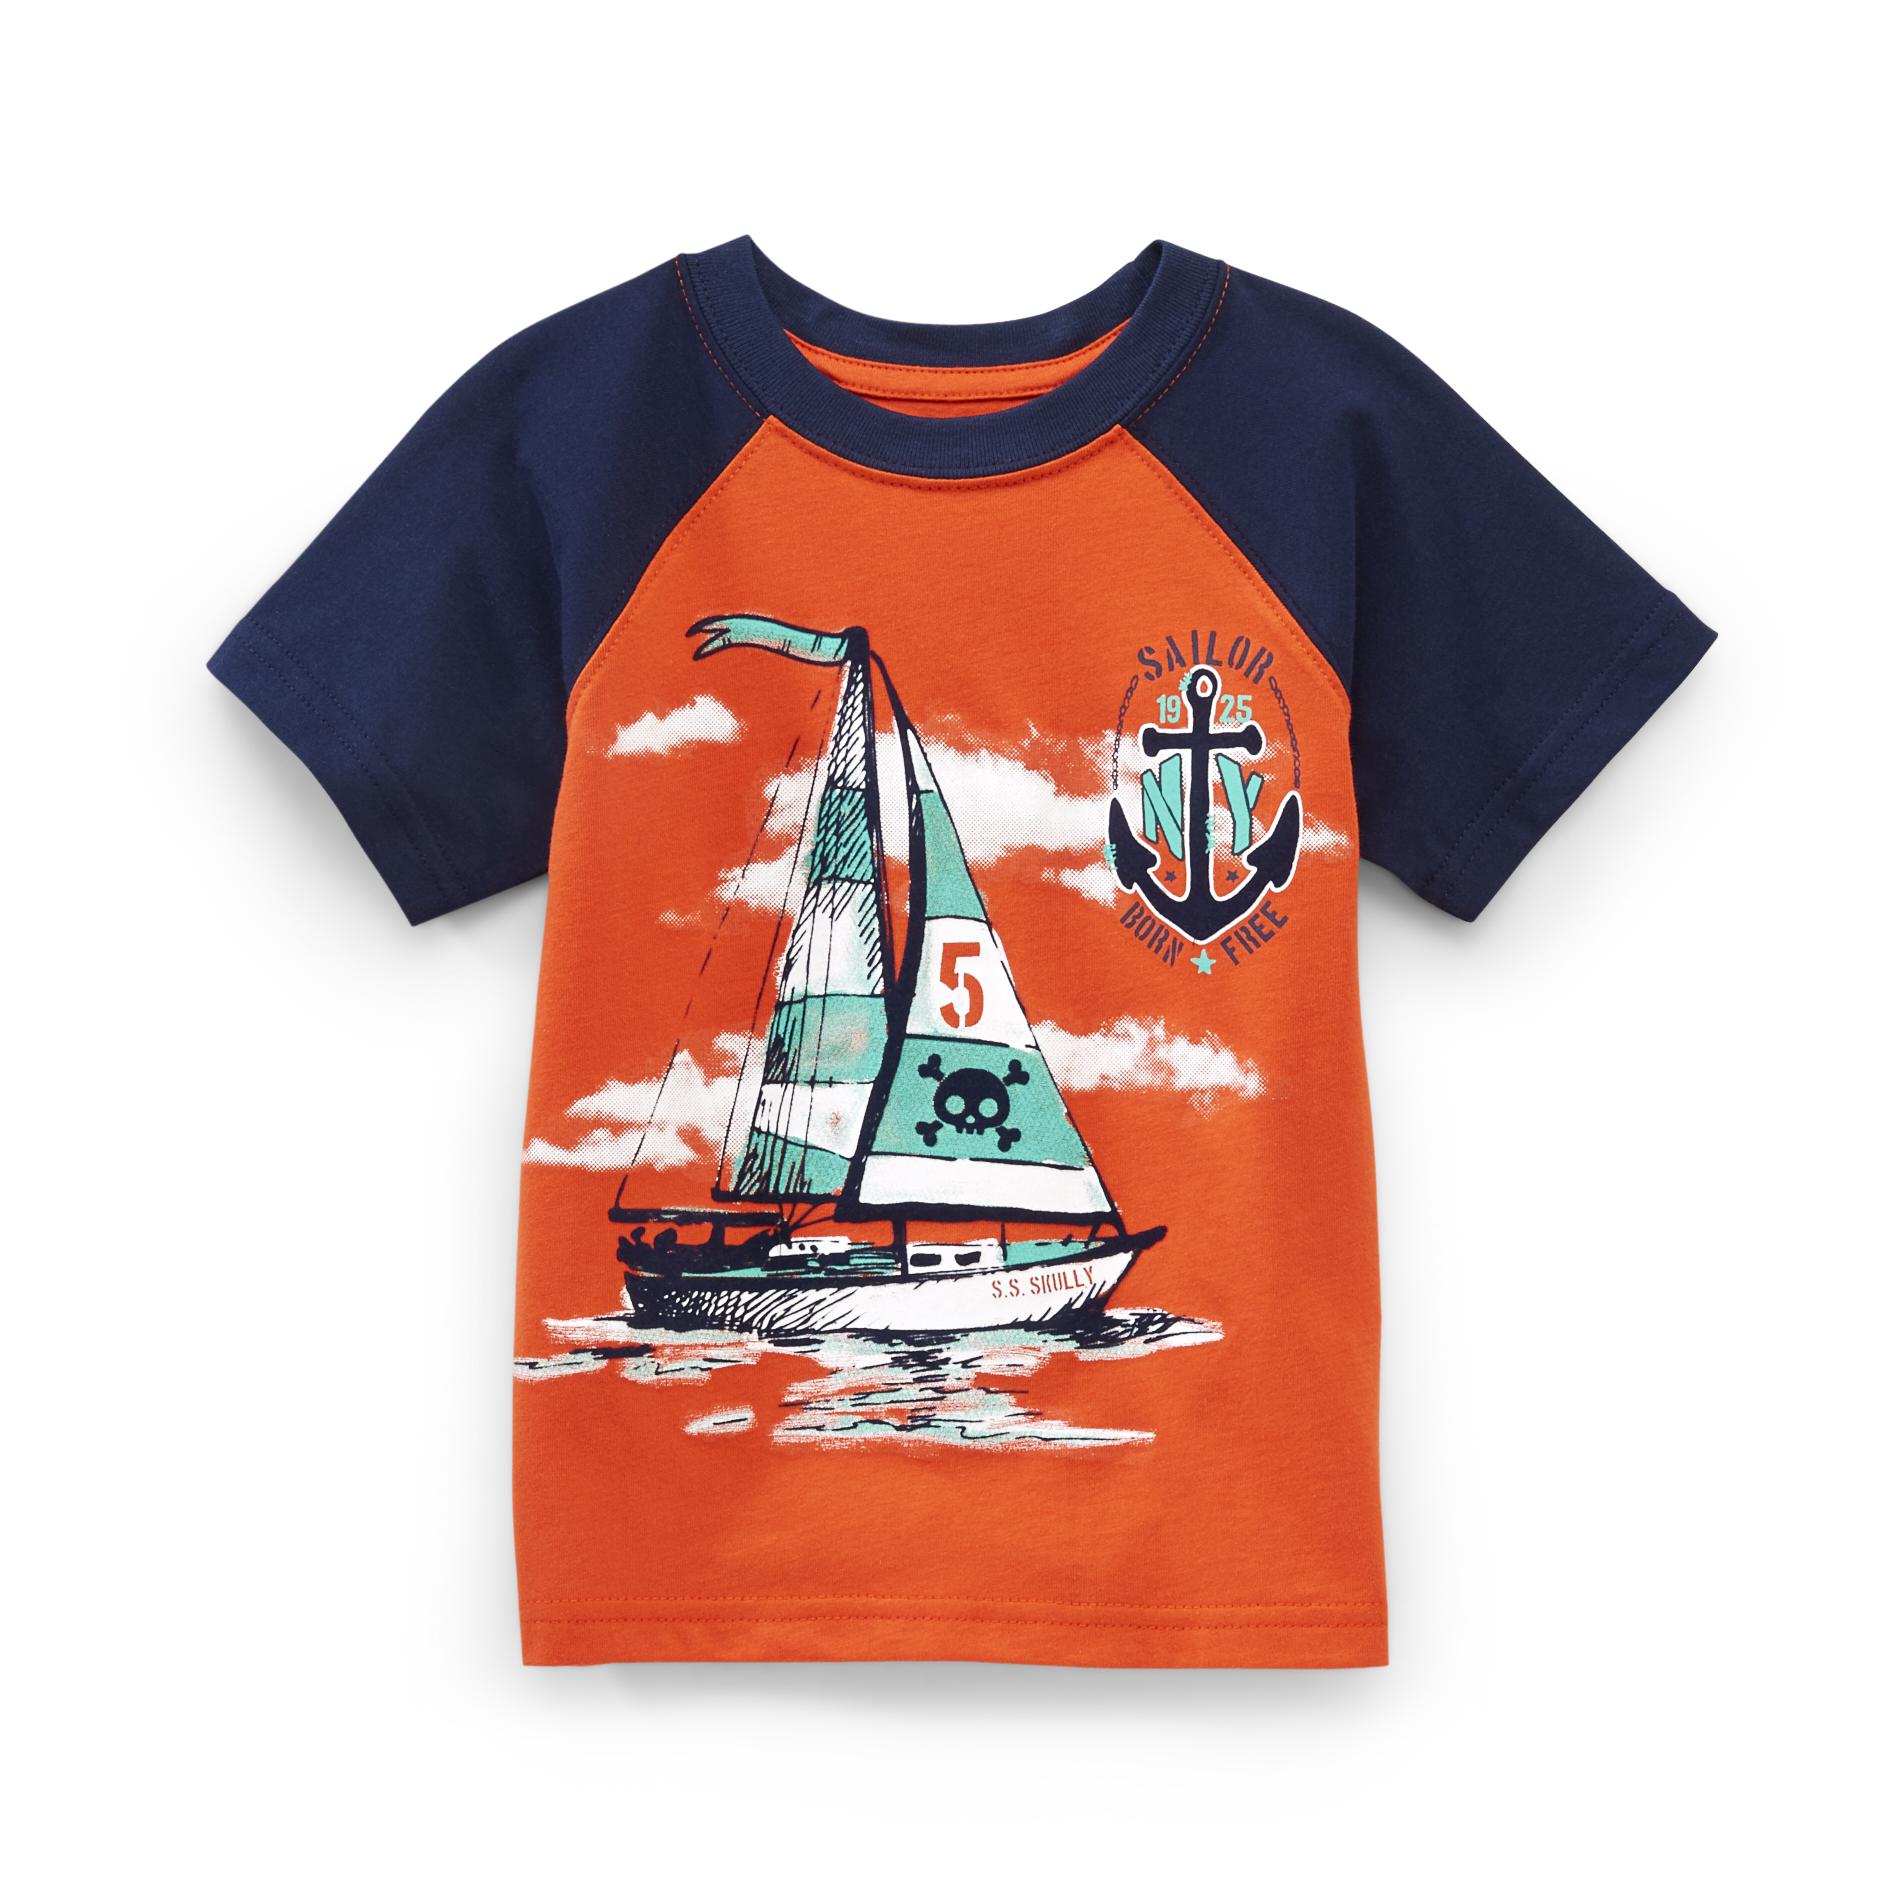 Toughskins Infant & Toddler Boy's T-Shirt - Sailboat